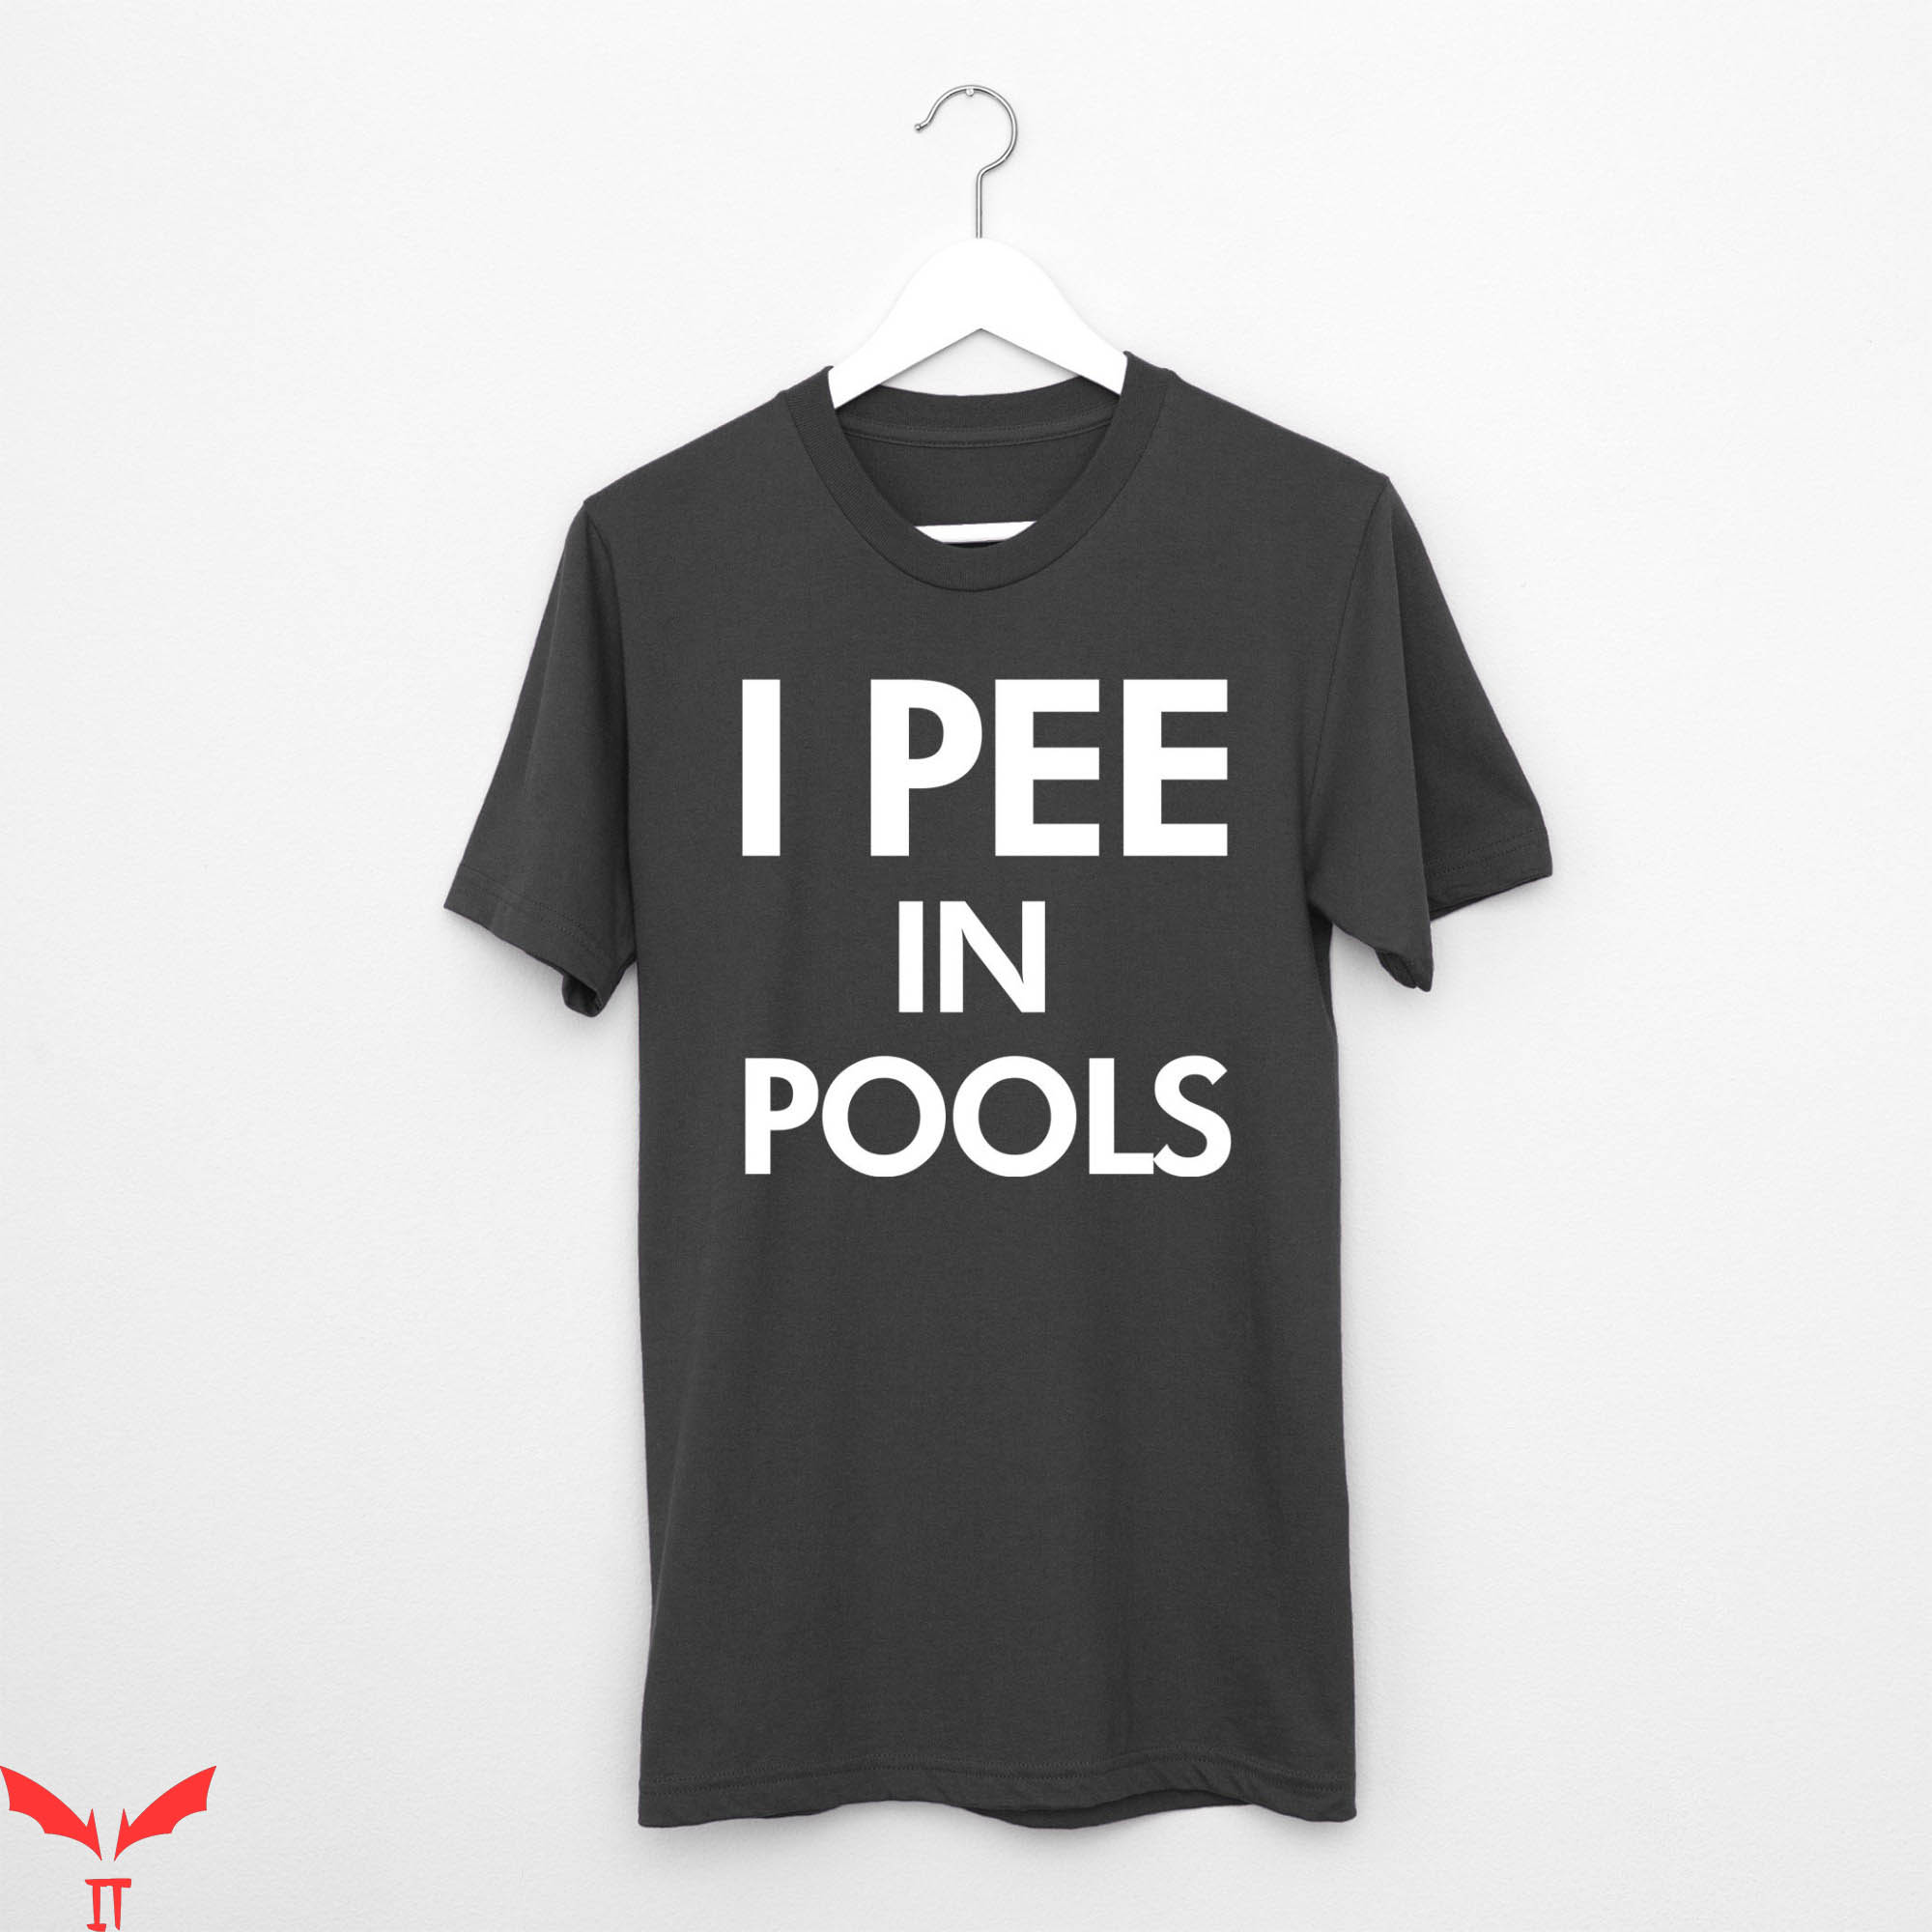 I Pee In Pools T-Shirt Joke Statement Swimmer Swimming